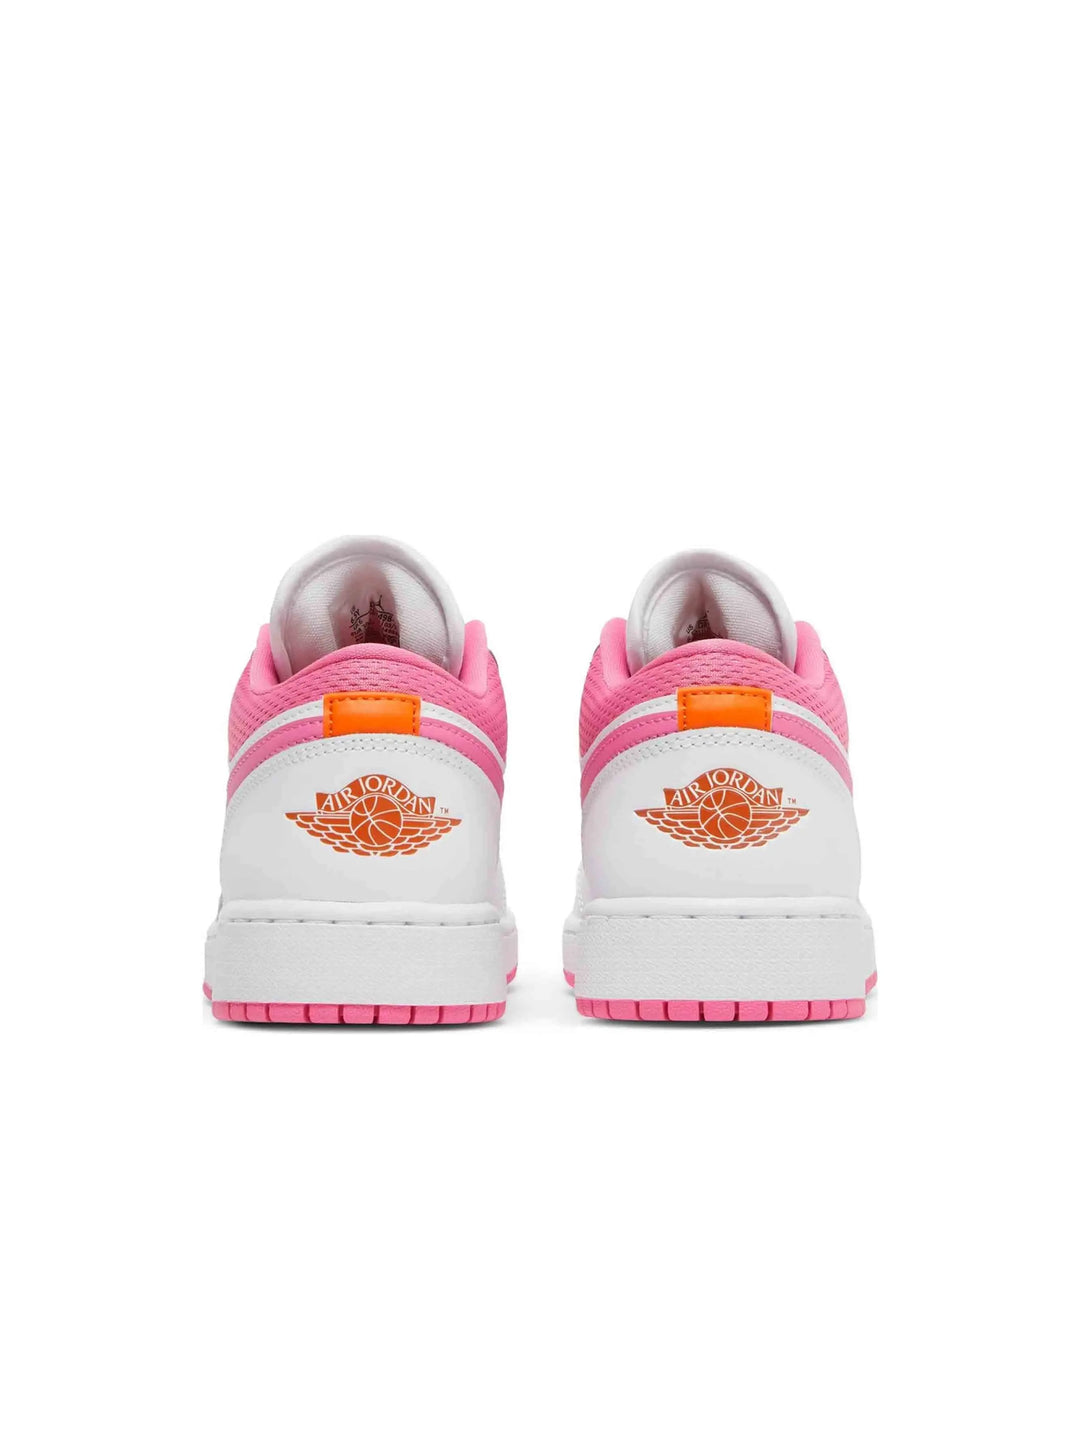 Nike Air Jordan 1 Low Pinksicle Orange (GS) - Prior